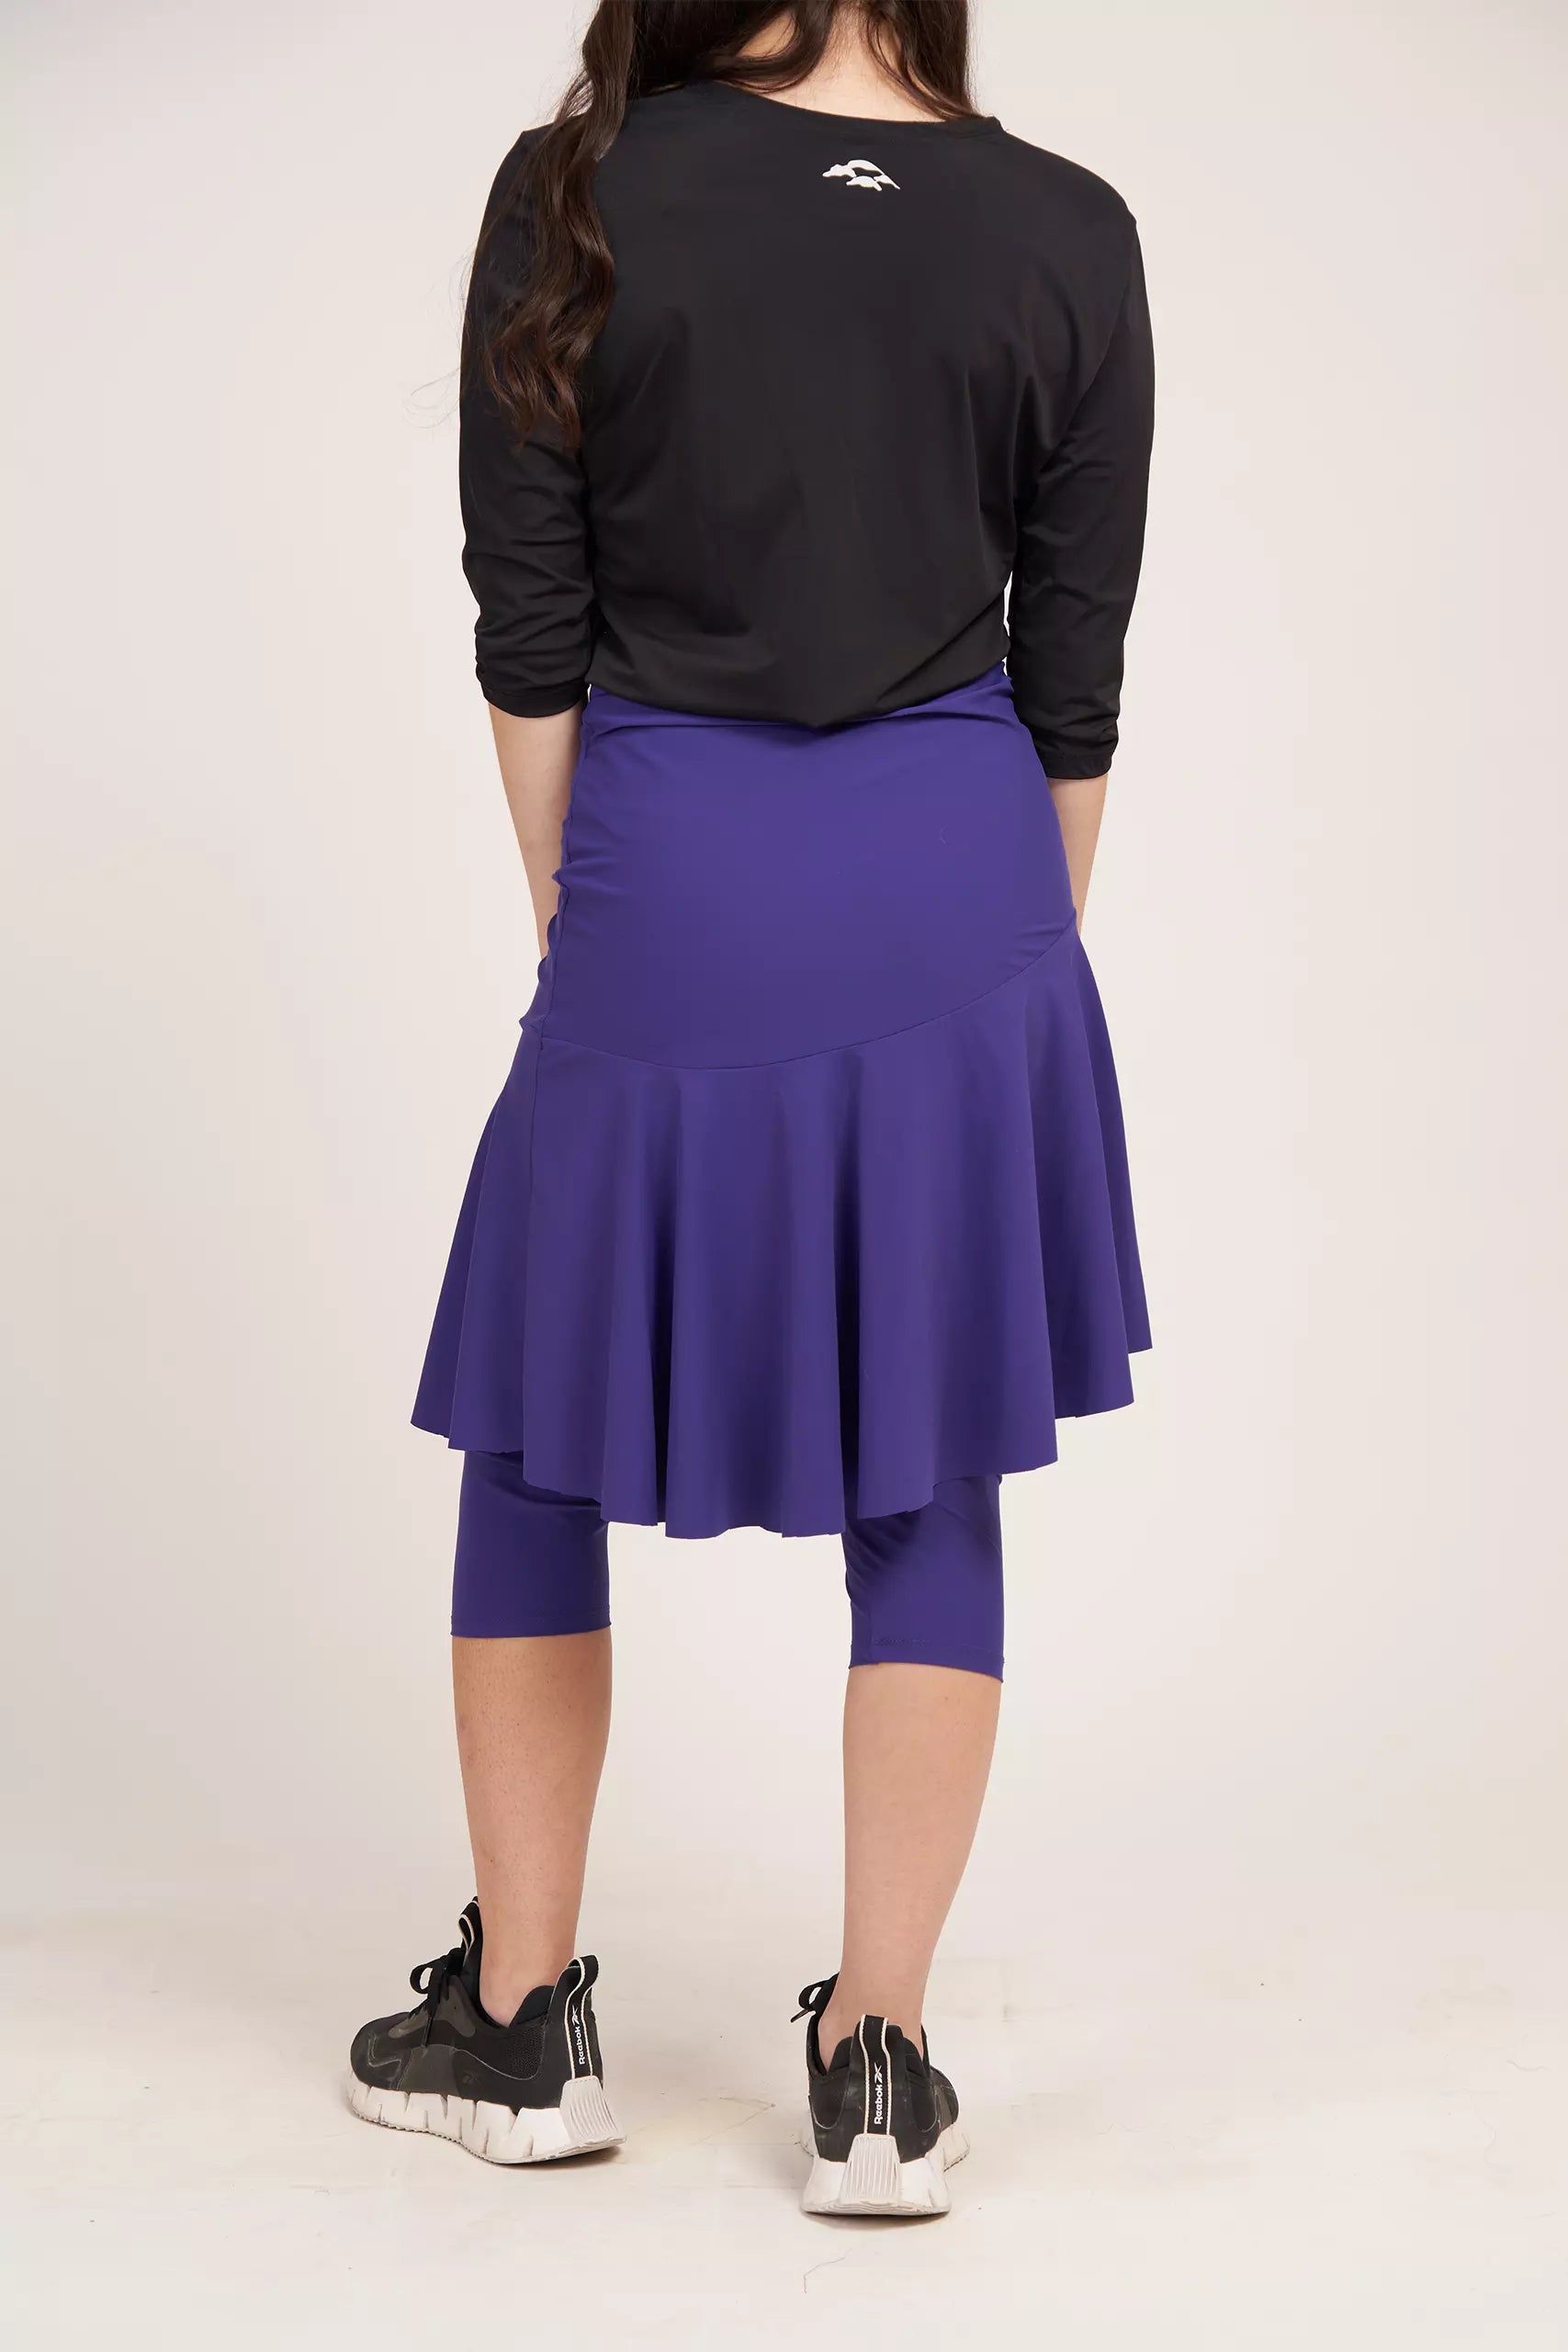 Ebun flare skirt with pockets - TAYE - Seni flare skirt with pockets